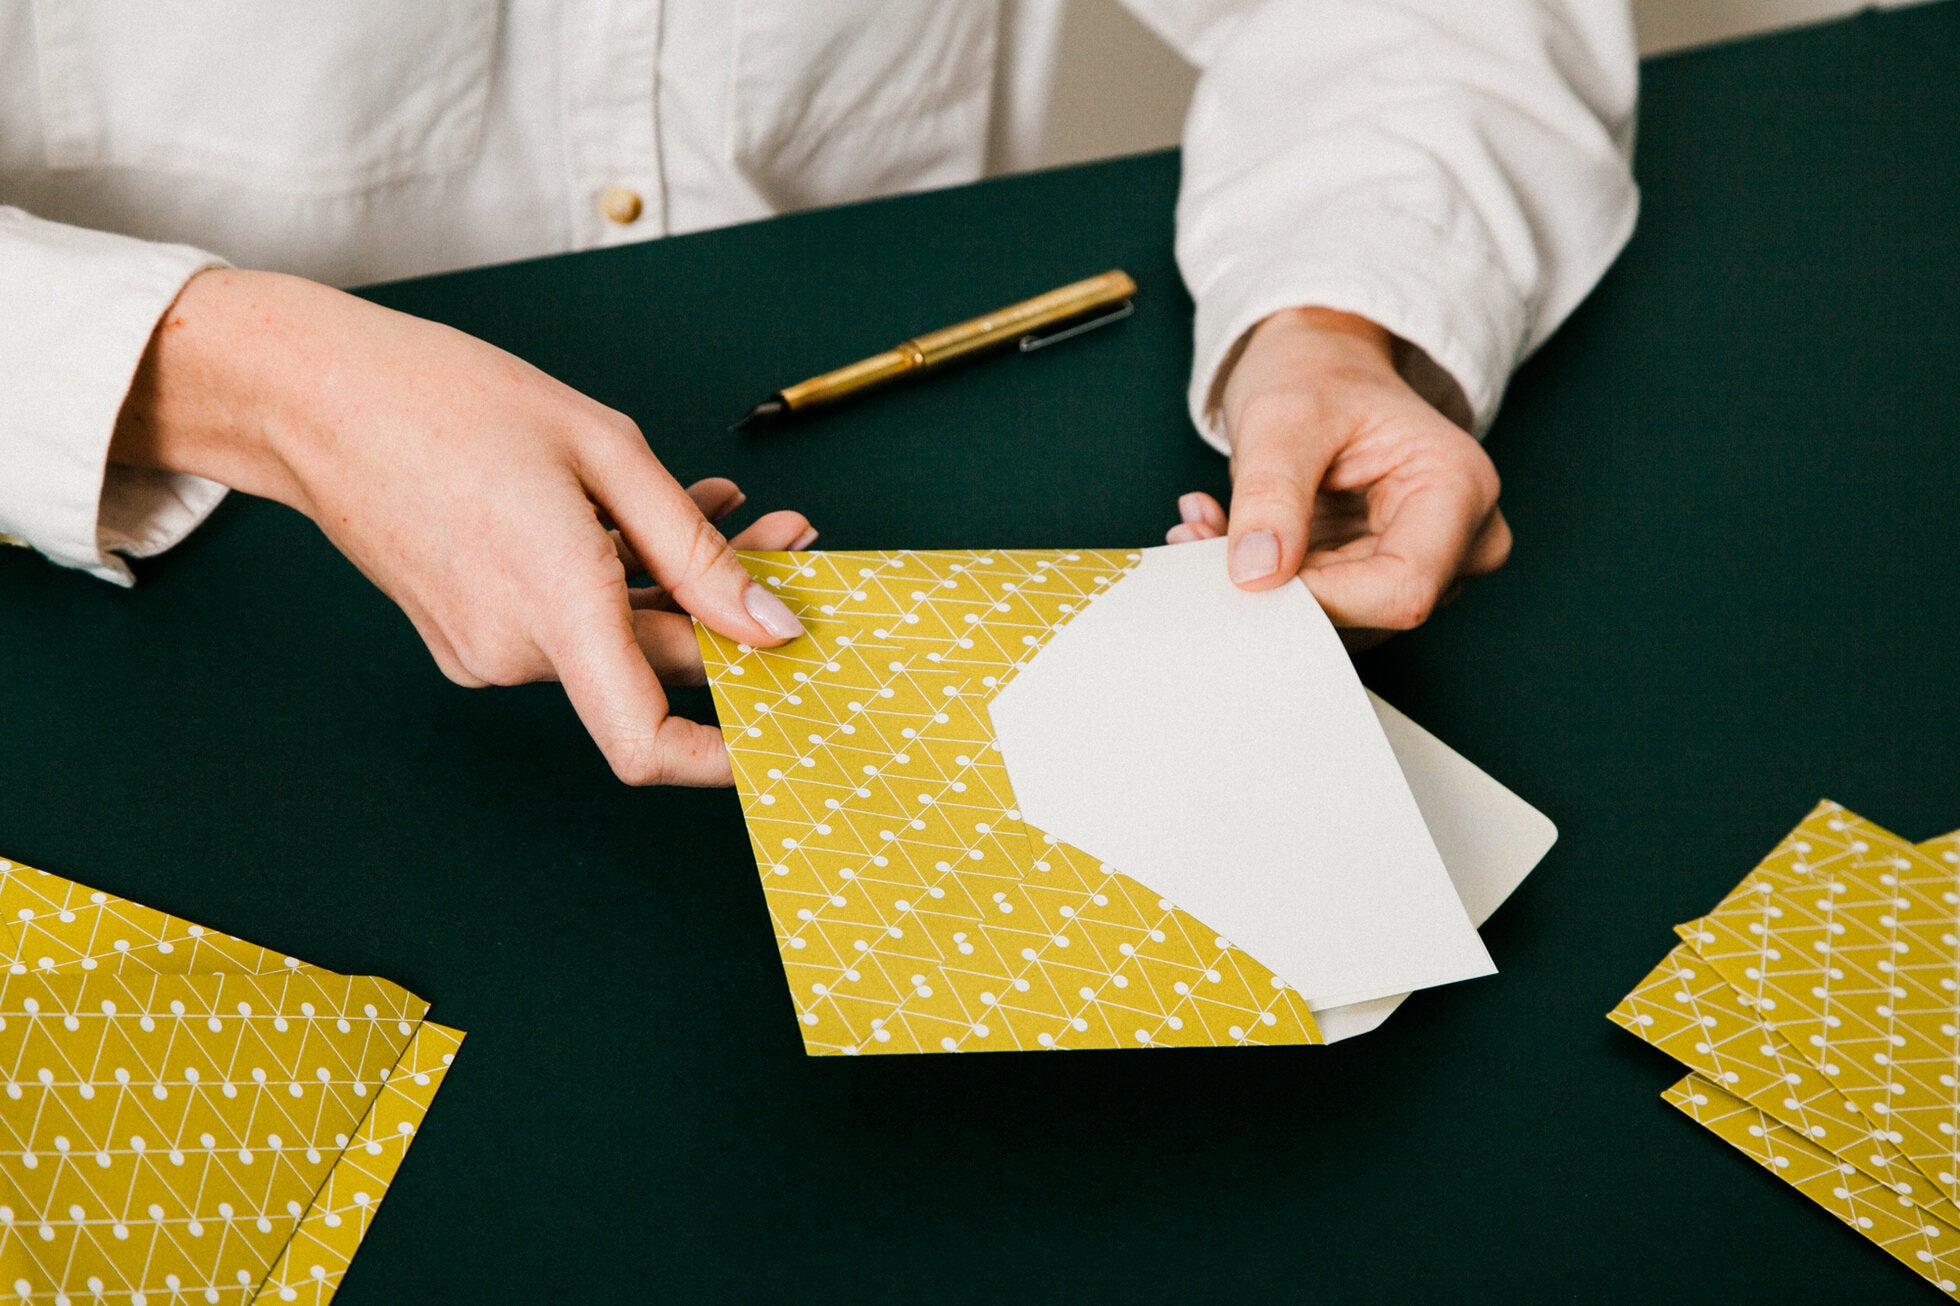 Patterned Envelopes - Set of 10 | Dash Print | Leaf Green / Chartreuse | by Ola - Lifestory - ola